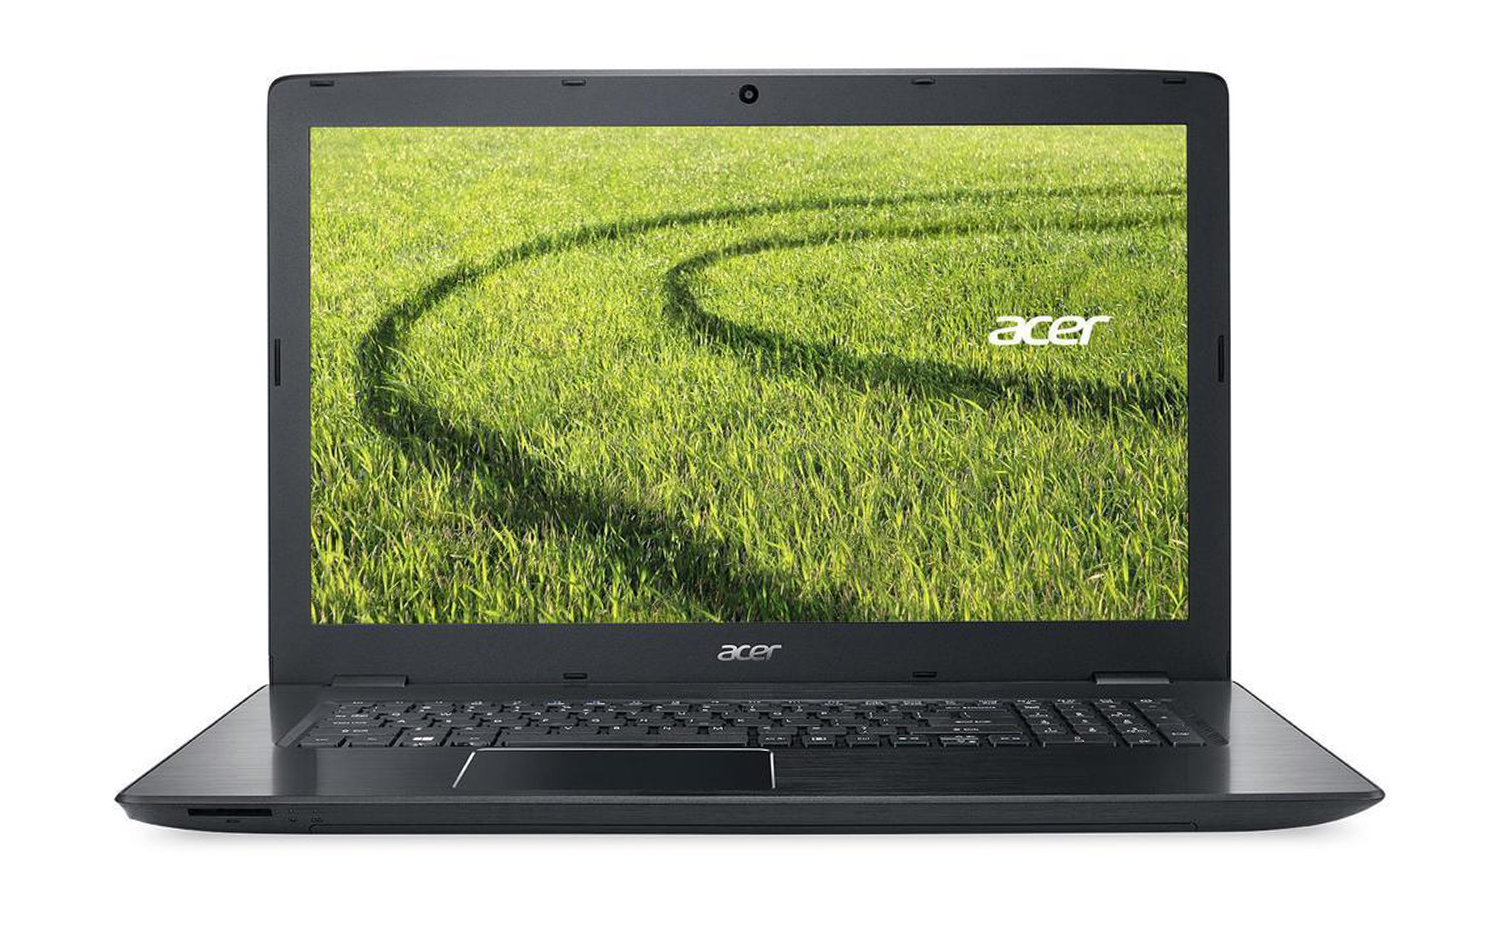 Acer Aspire E5 Intel Core i5 7th Gen 8GB RAM 256GB SSD Windows 10 Home Nvidia GeForce 940MX